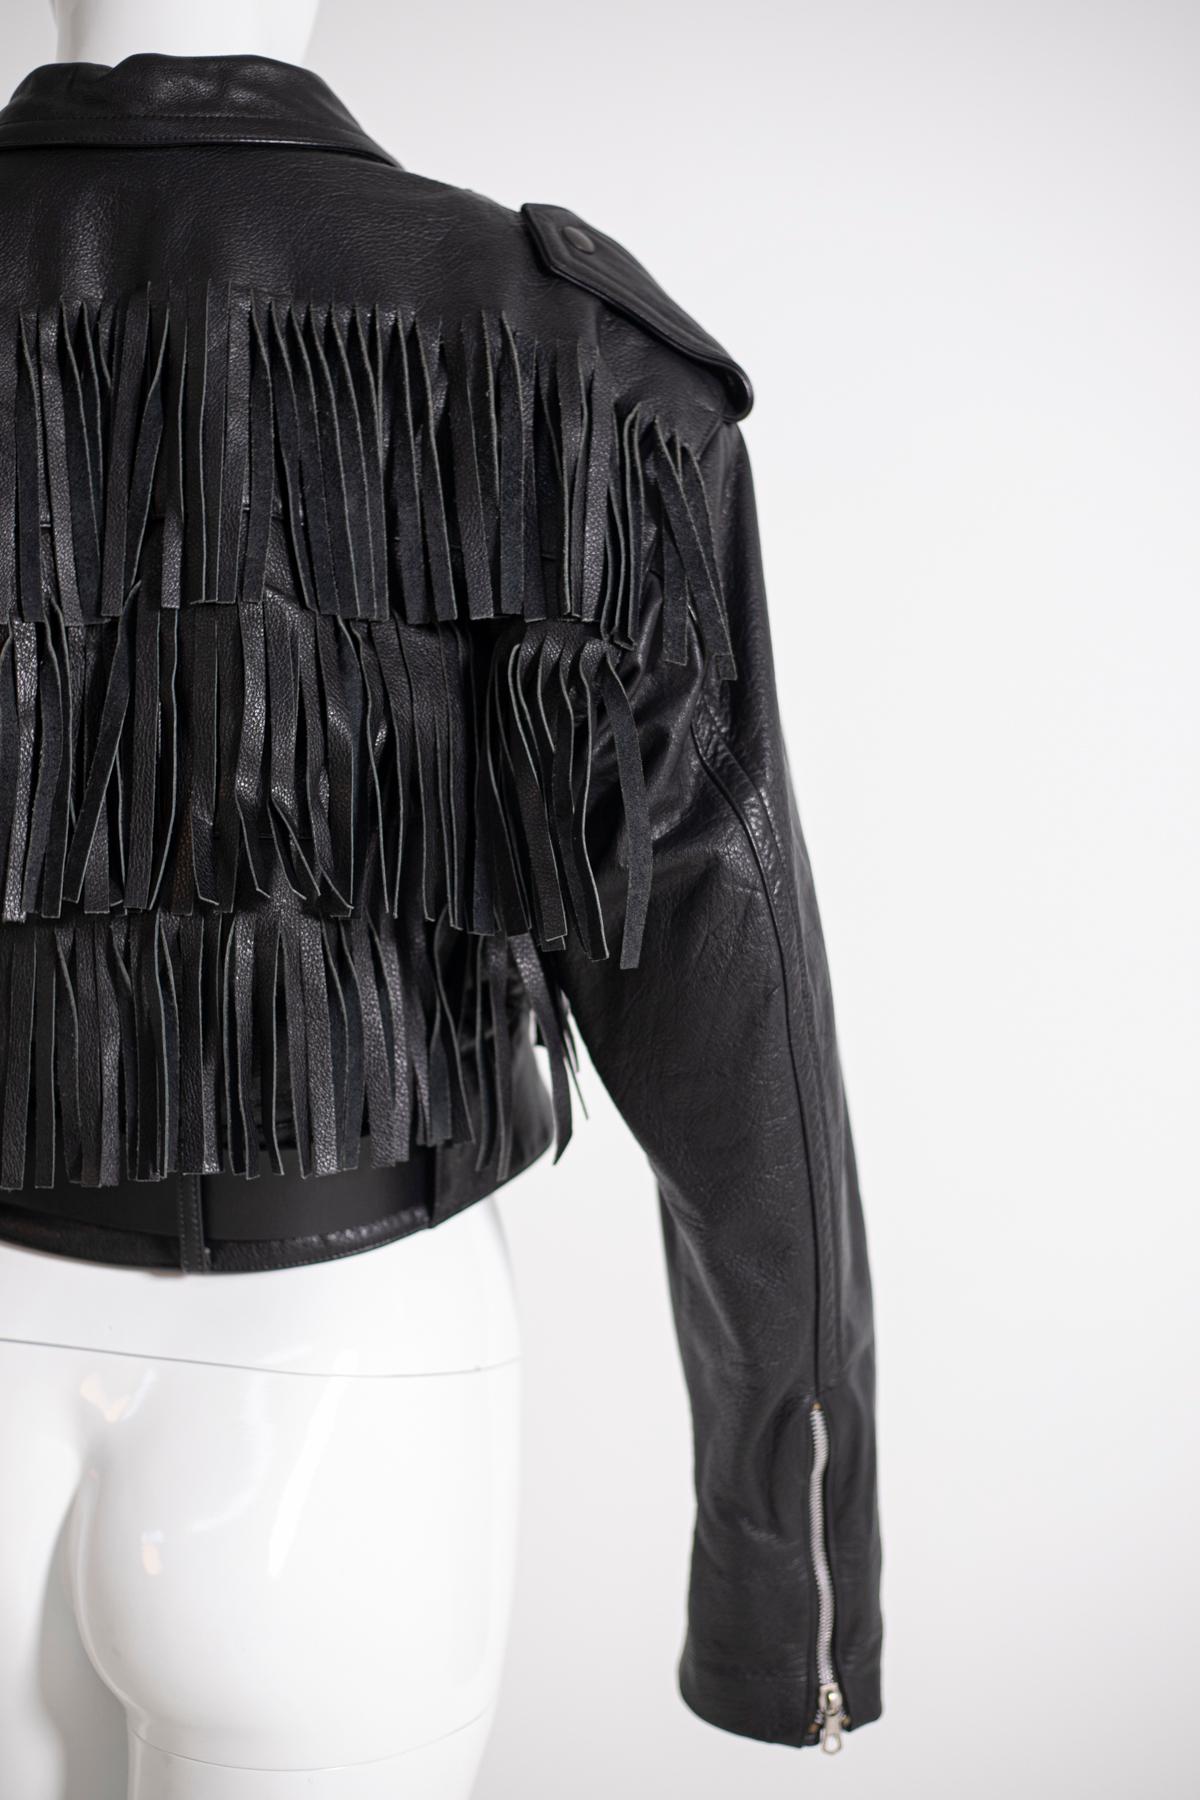 Jean Paul Gaultier 1990's Black Leather Biker Jacket In Excellent Condition In Milano, IT